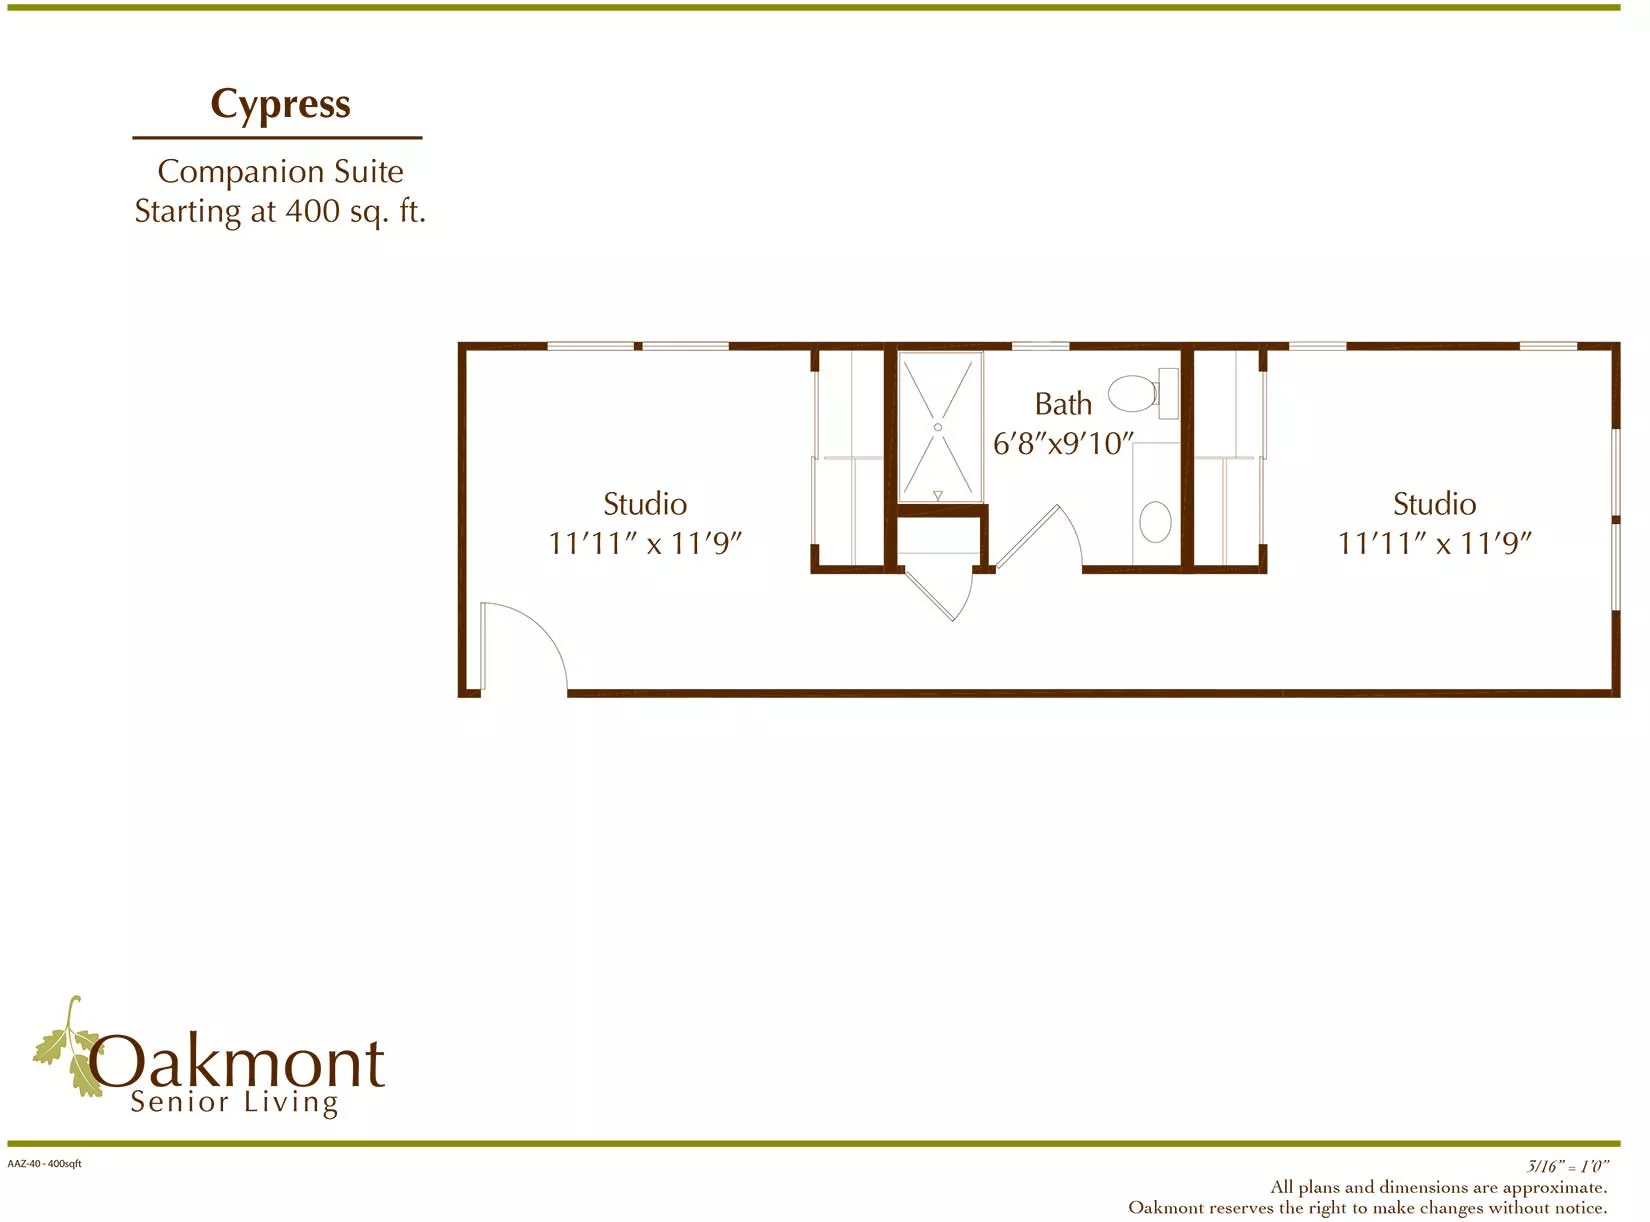 Cypress companion suite floor plan